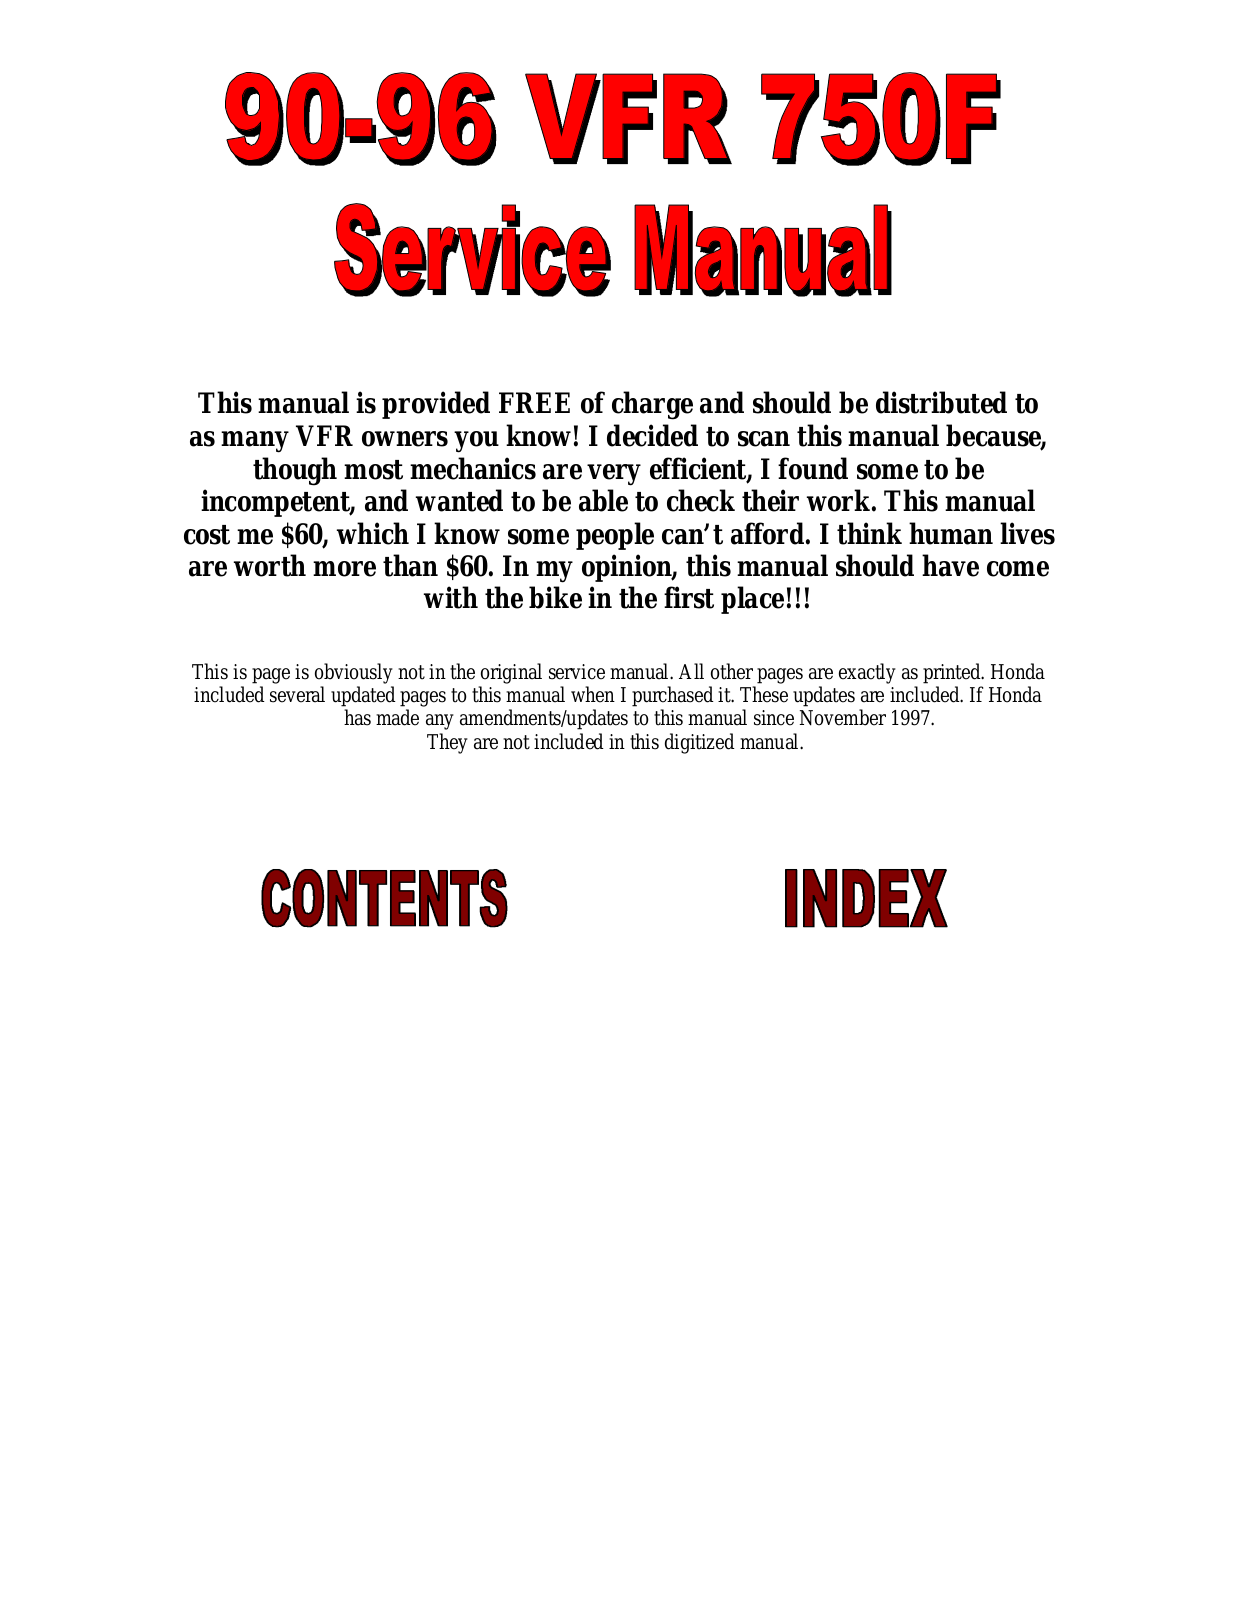 Honda VFR 750f 90-96 Service Manual